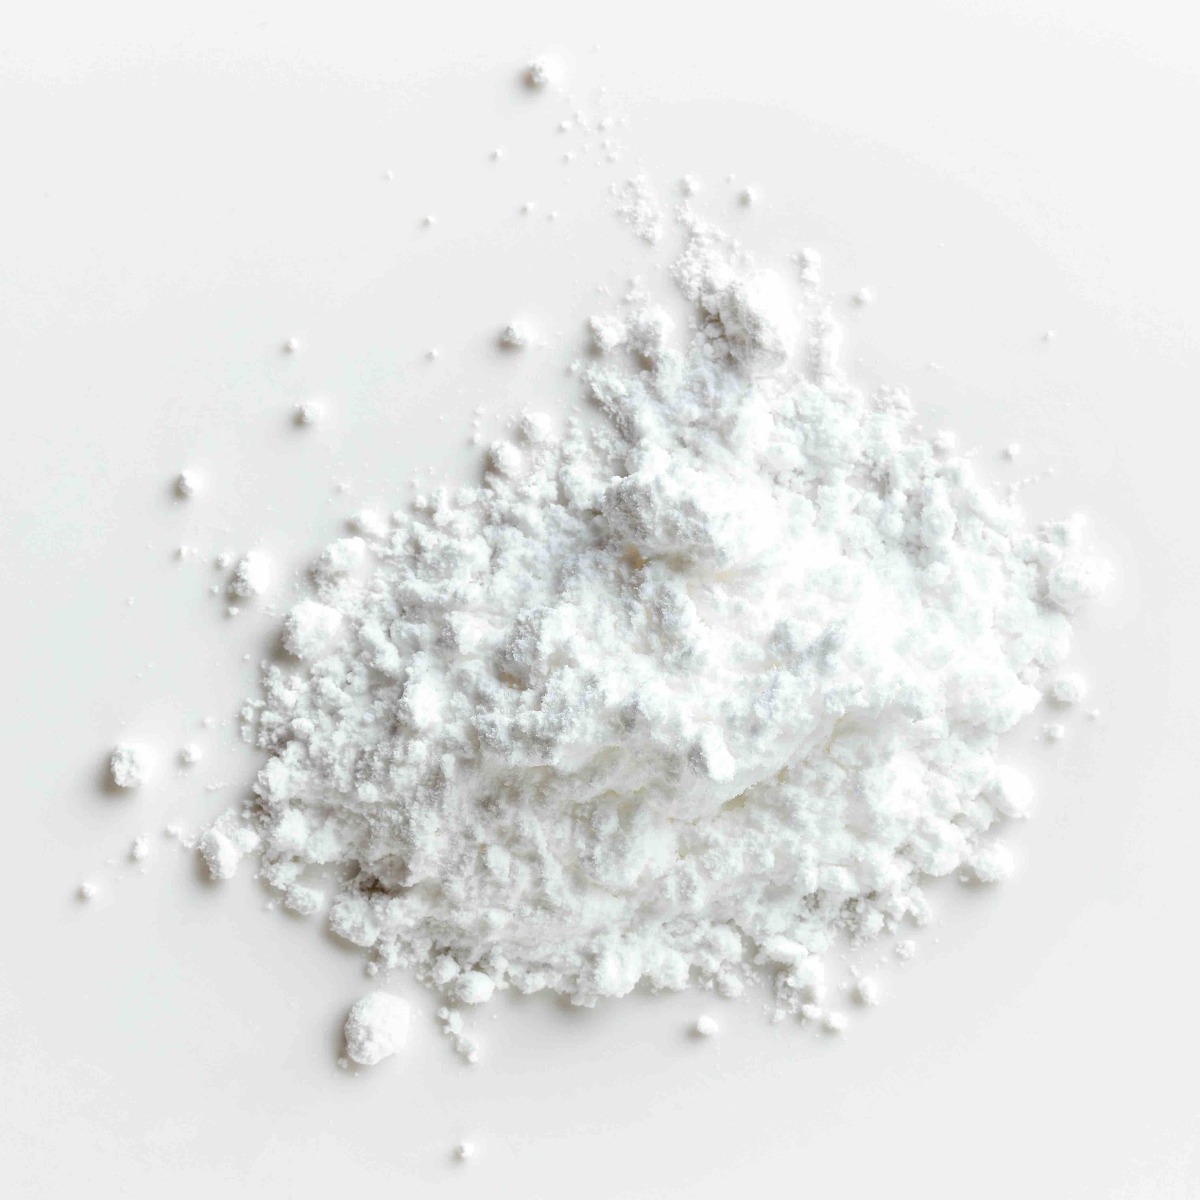 Hexagonal Boron Nitride (h-BN) Powder